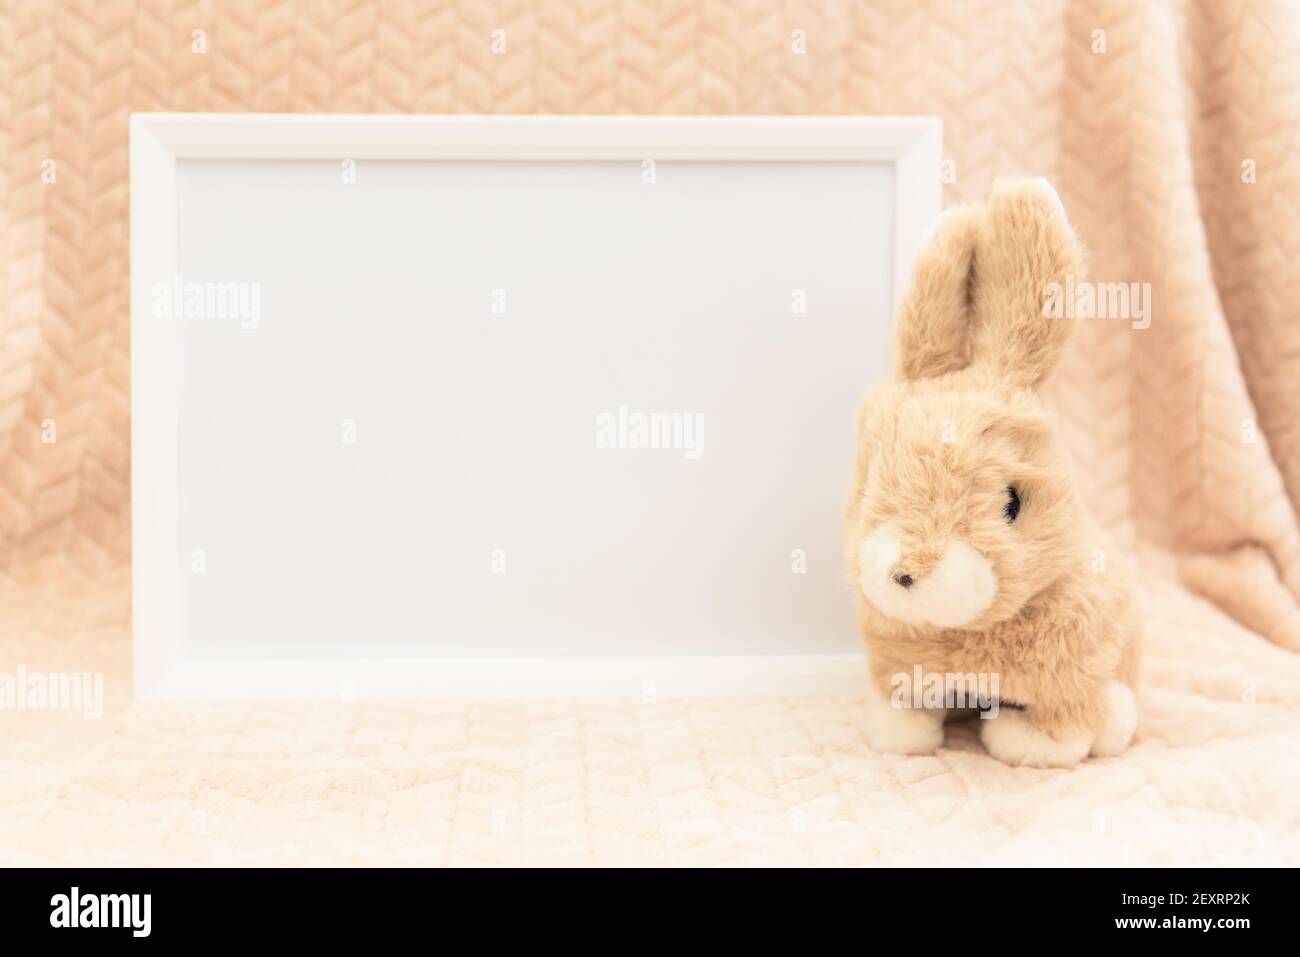 Stuffed animal toy bunny and white frame mockup Stock Photo